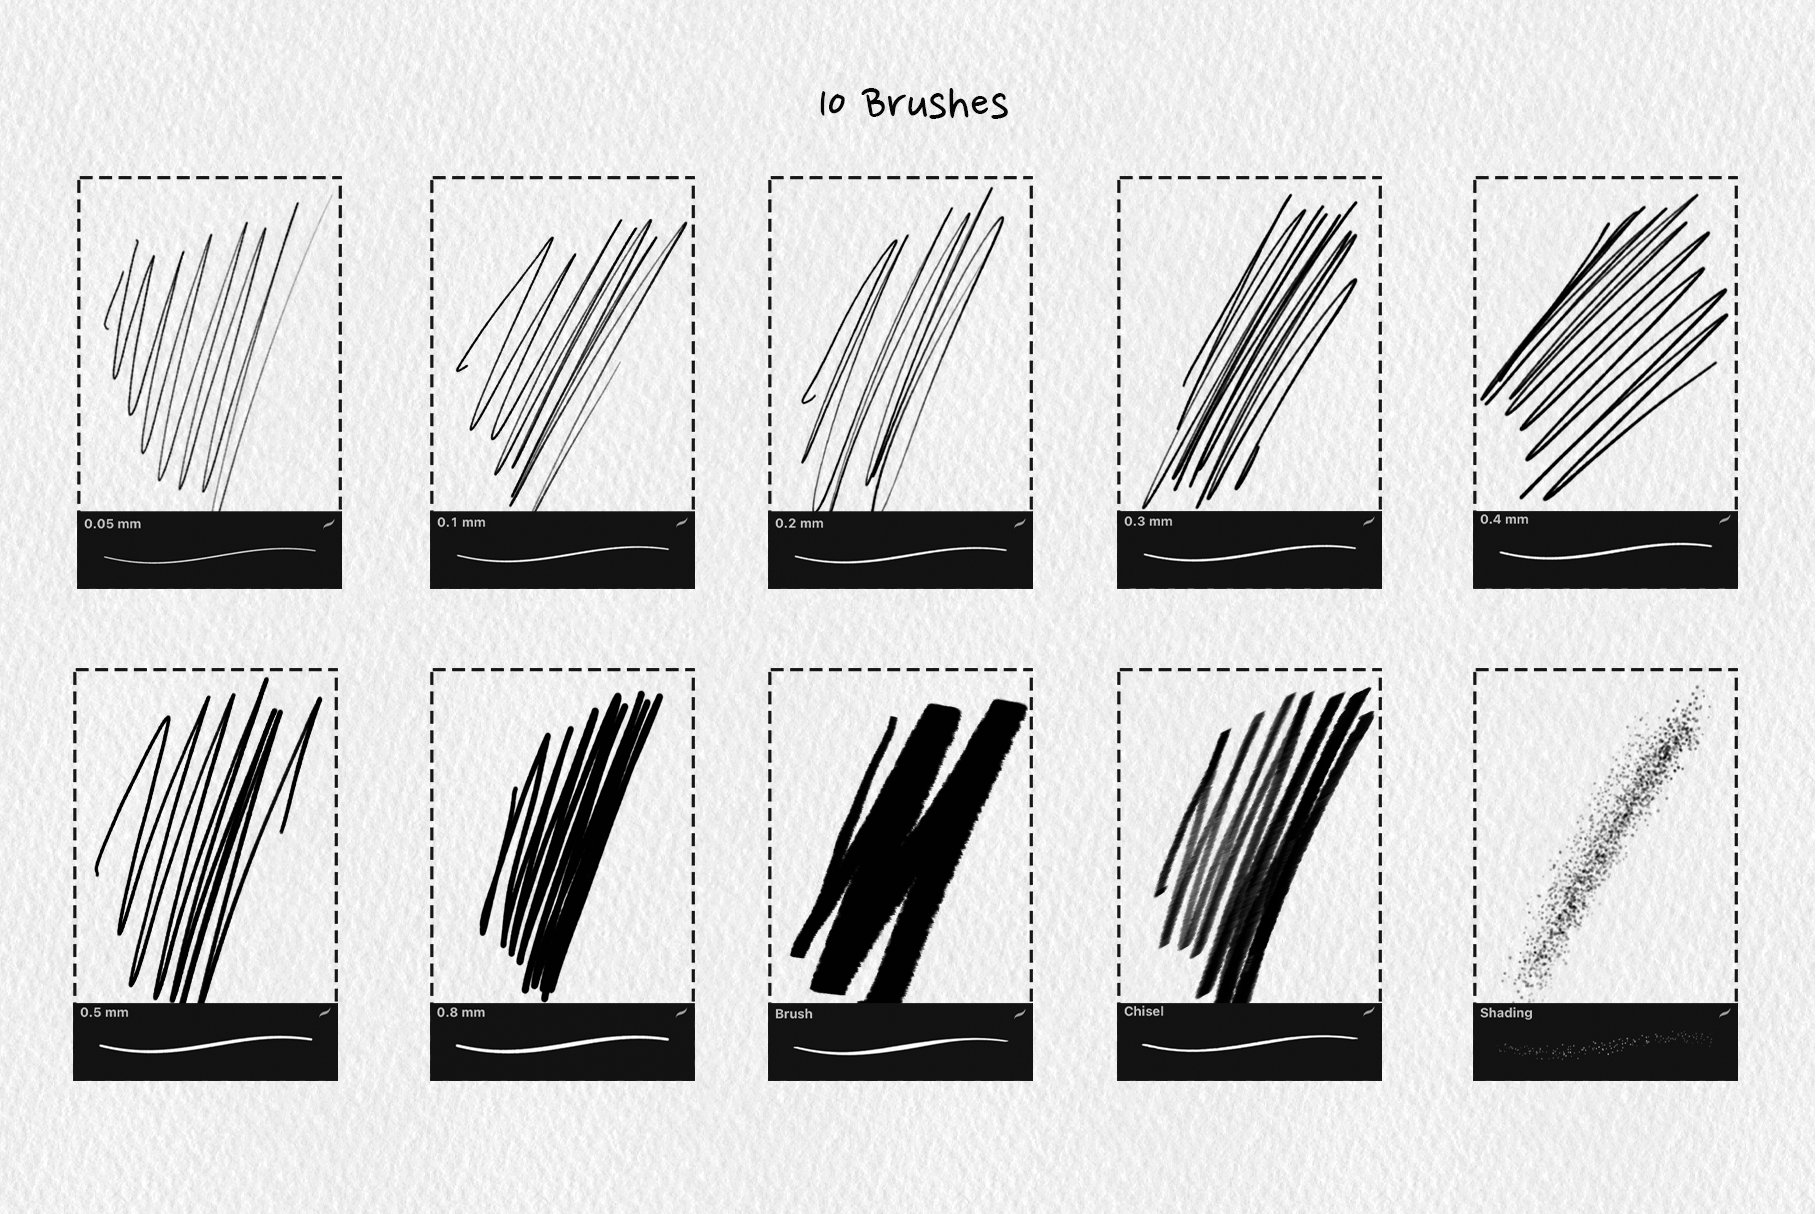 Fine Liner Brushes & Patterns - Design Cuts